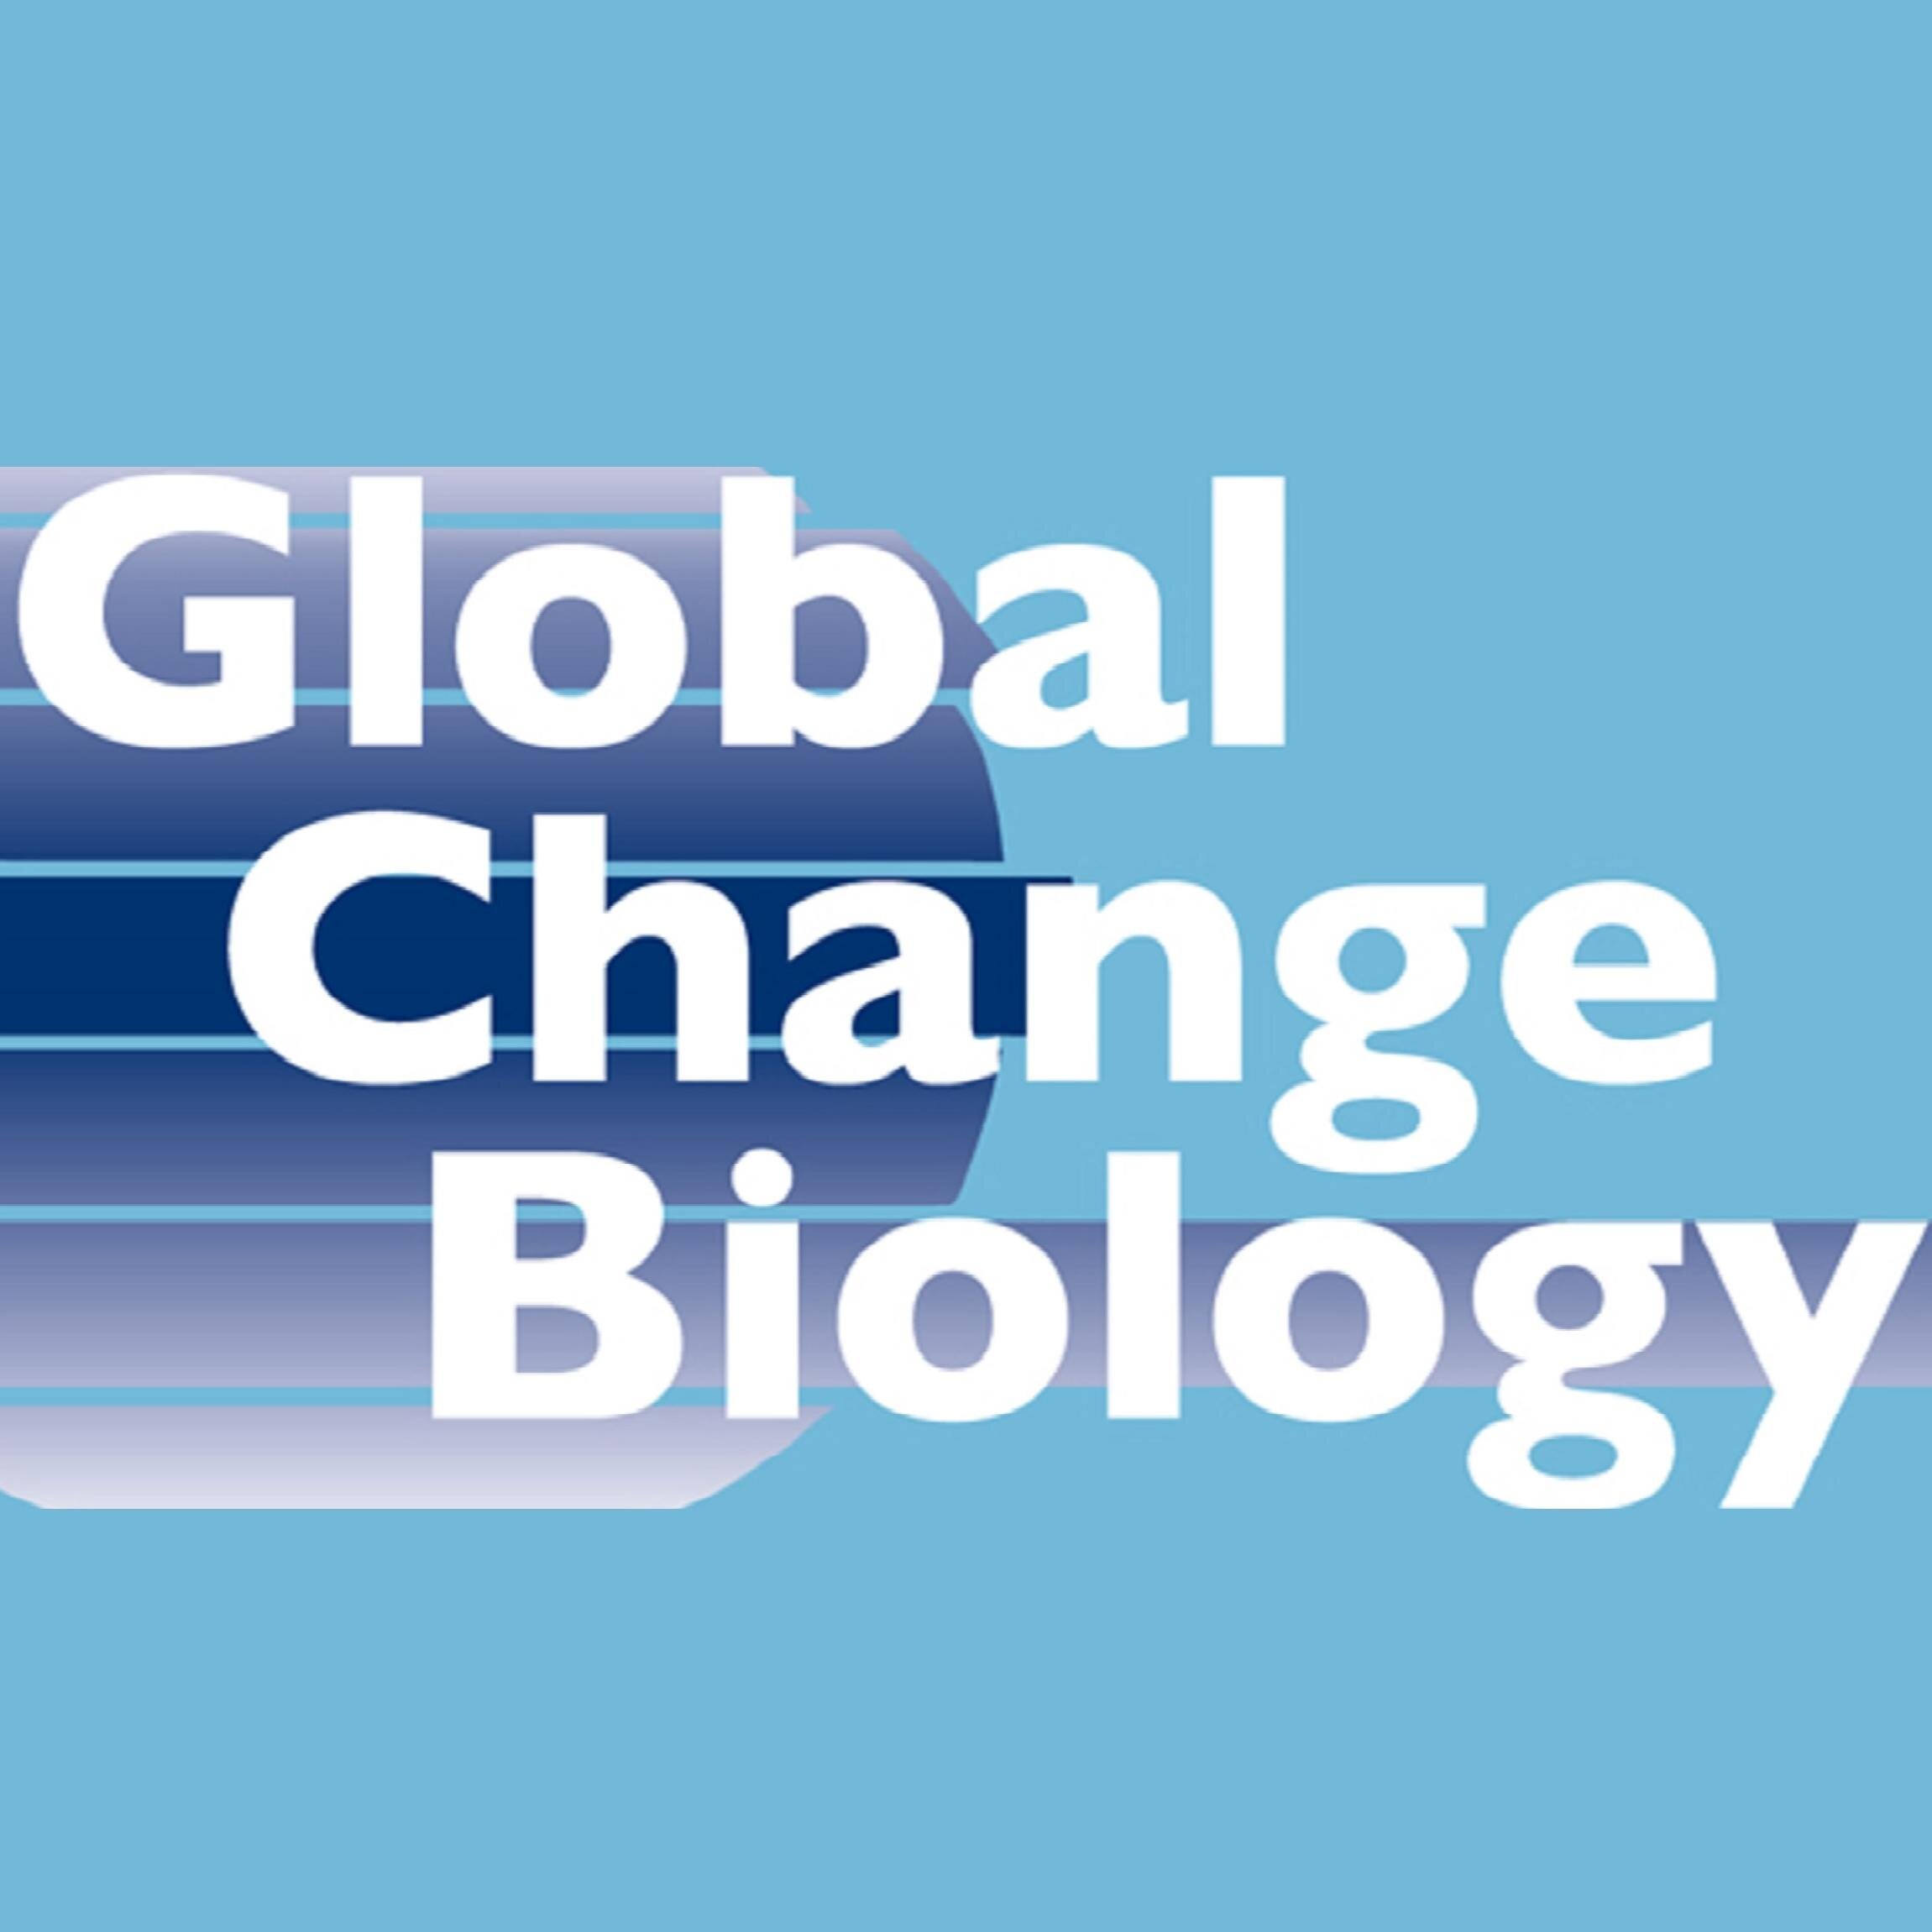 Global Change Biology